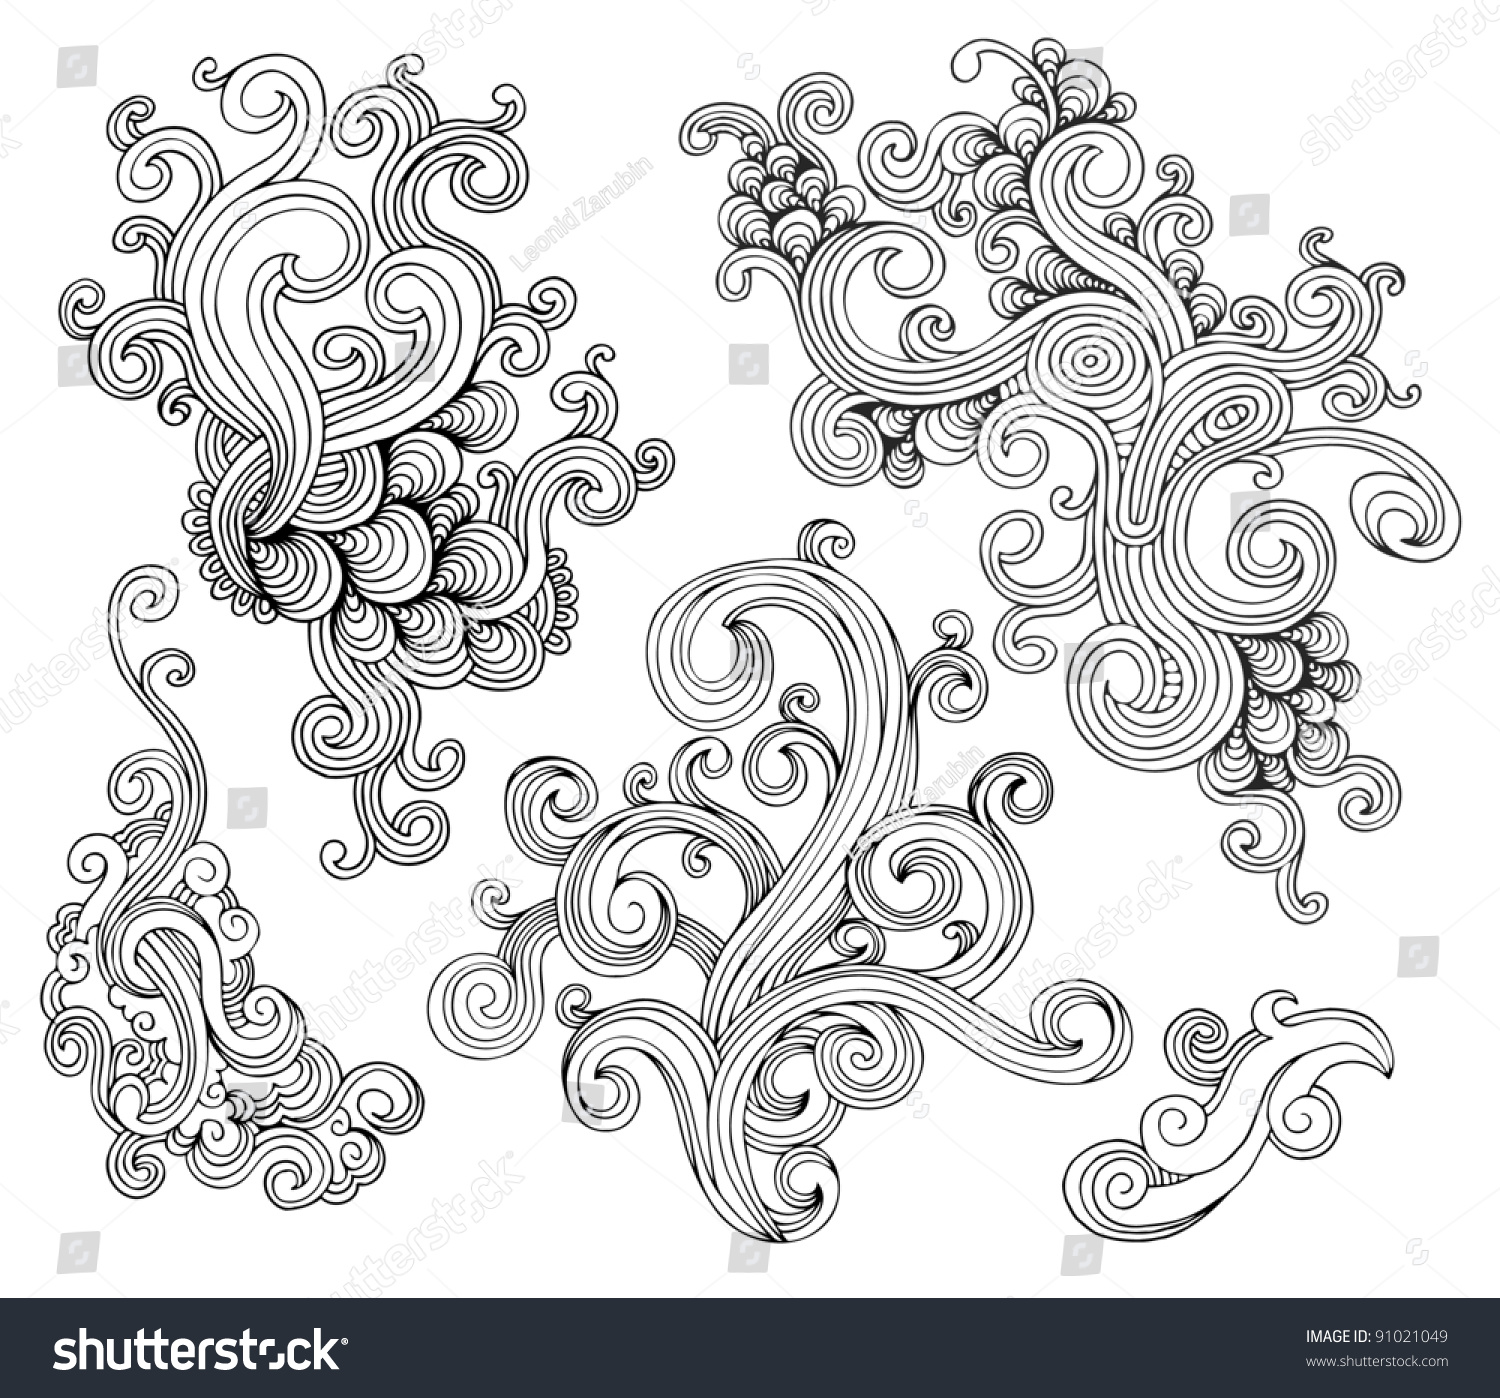 Vector Swirl Set - 91021049 : Shutterstock